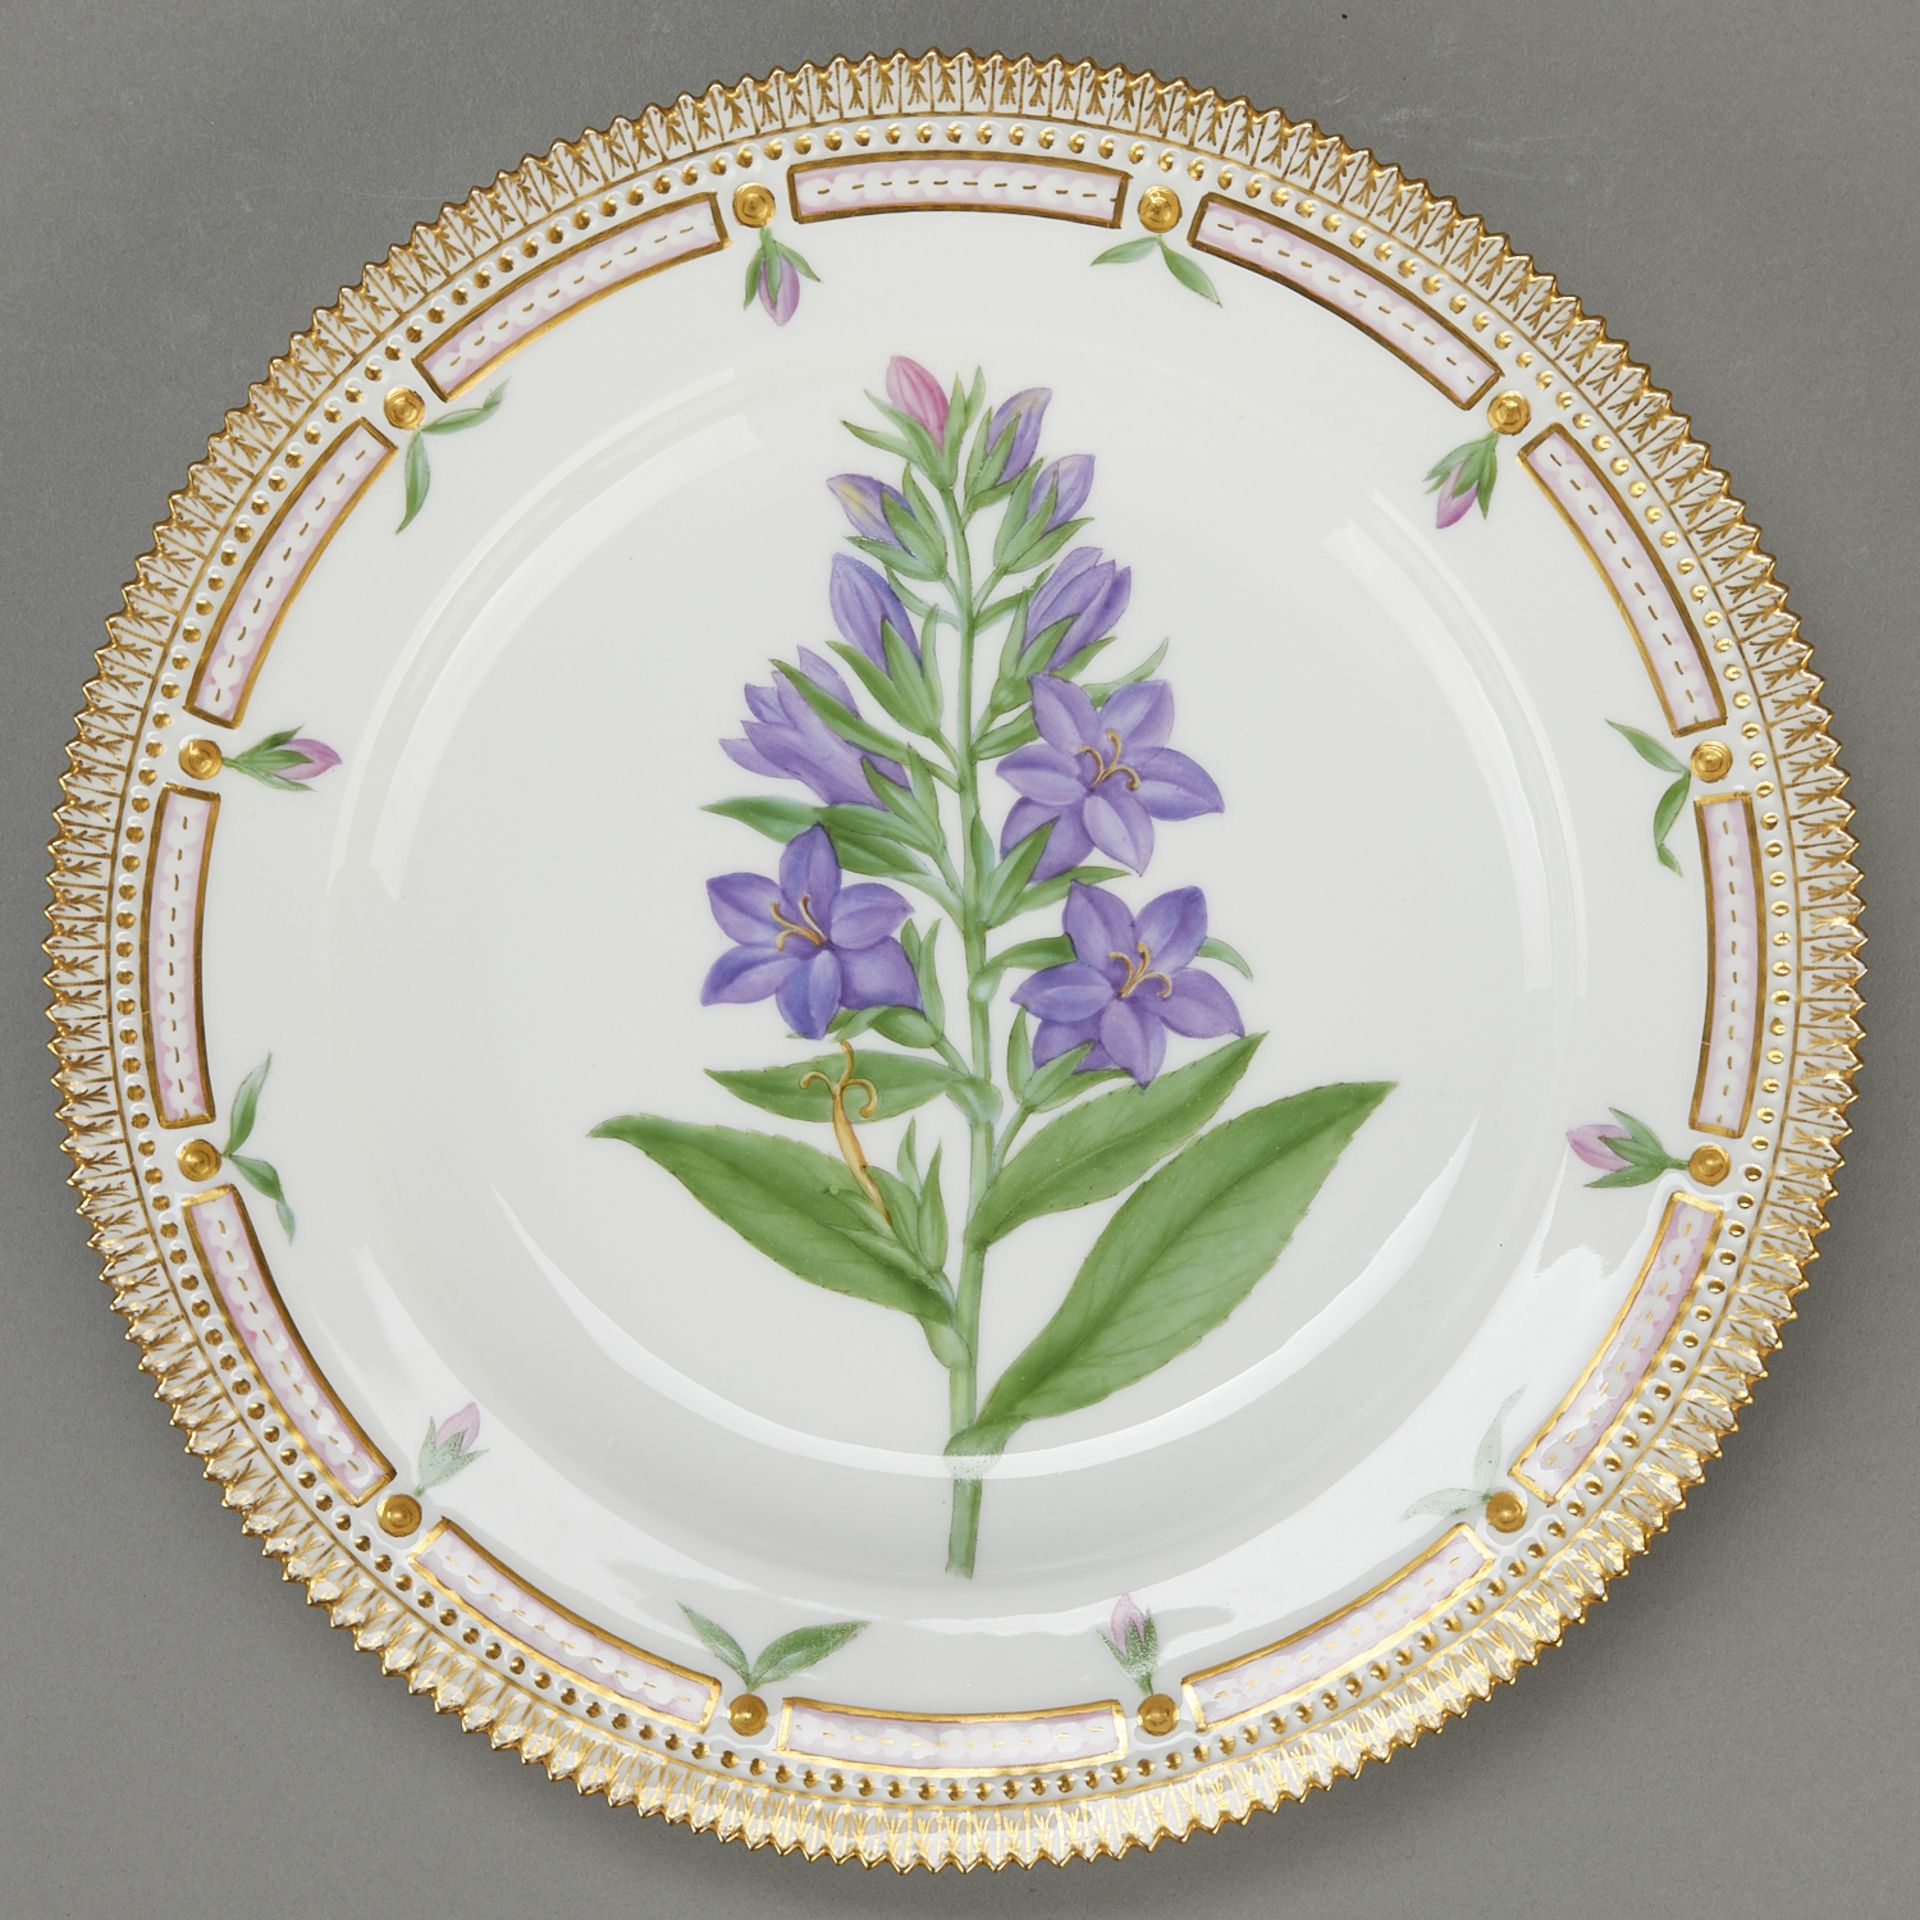 Set 11 Flora Danica Luncheon Plates - Image 20 of 22